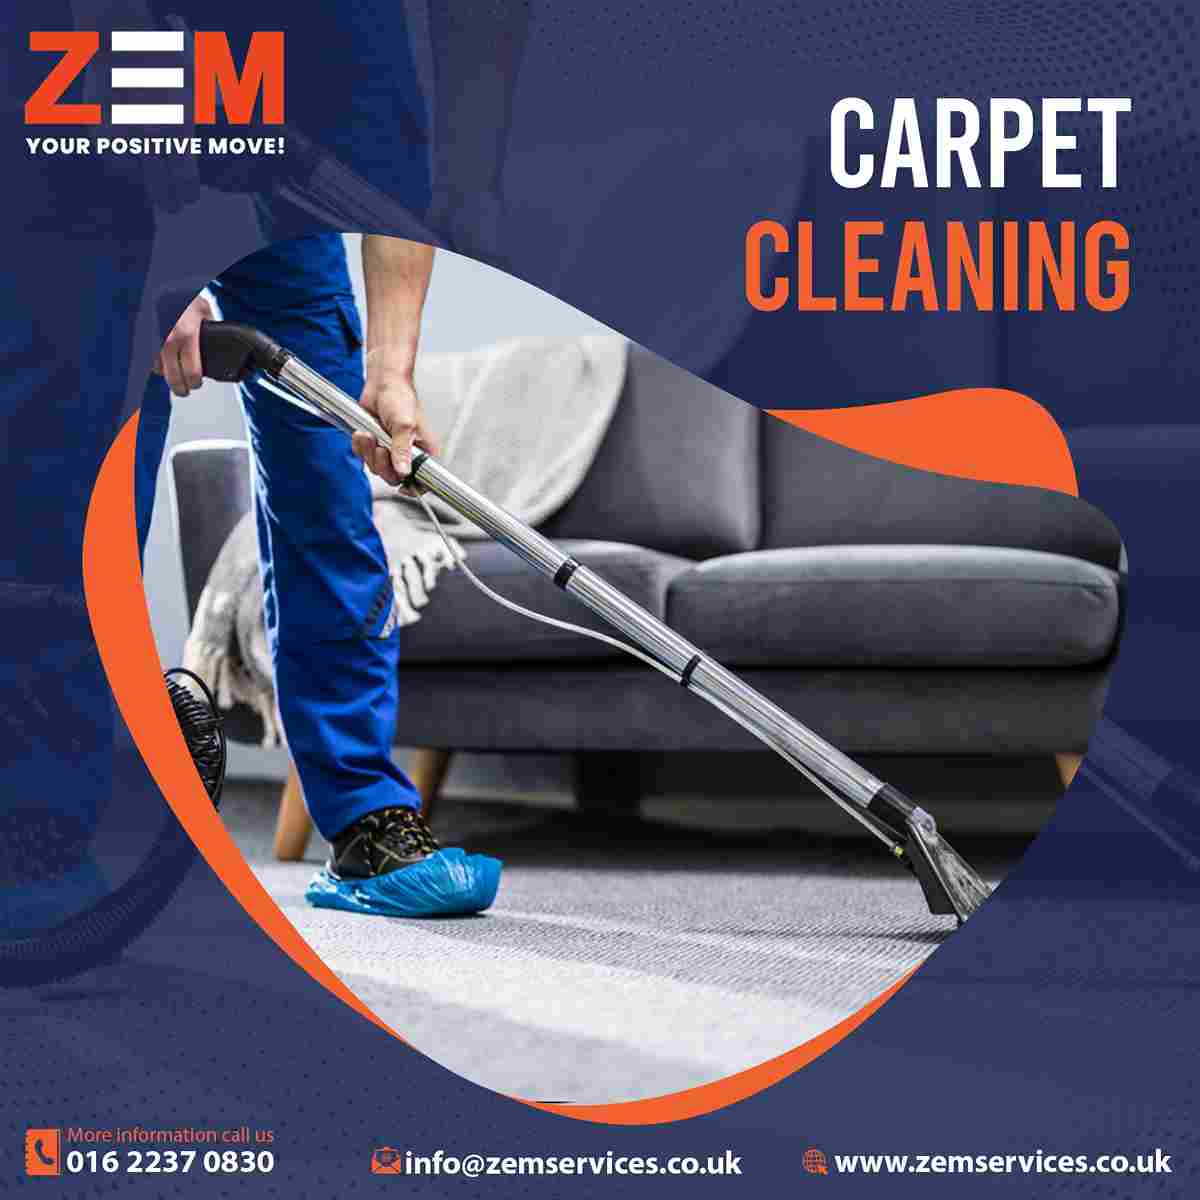 Zem Carpet Cleaning Services